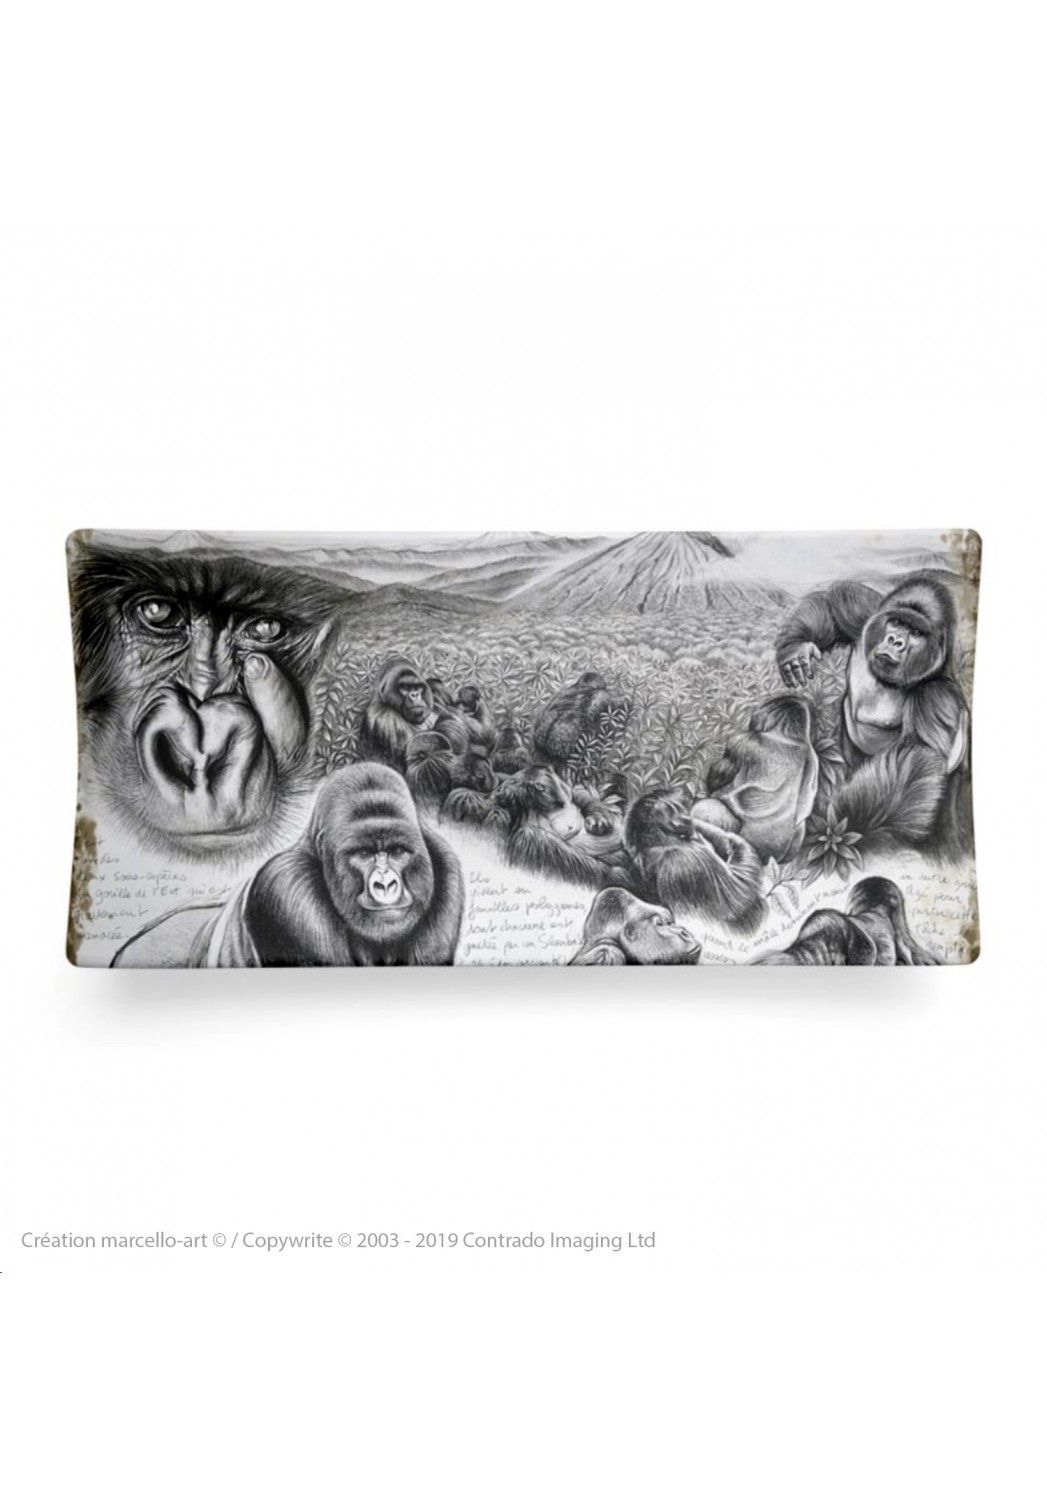 Marcello-art: Rectangular plates Rectangular plate 301 Virunga gorilla